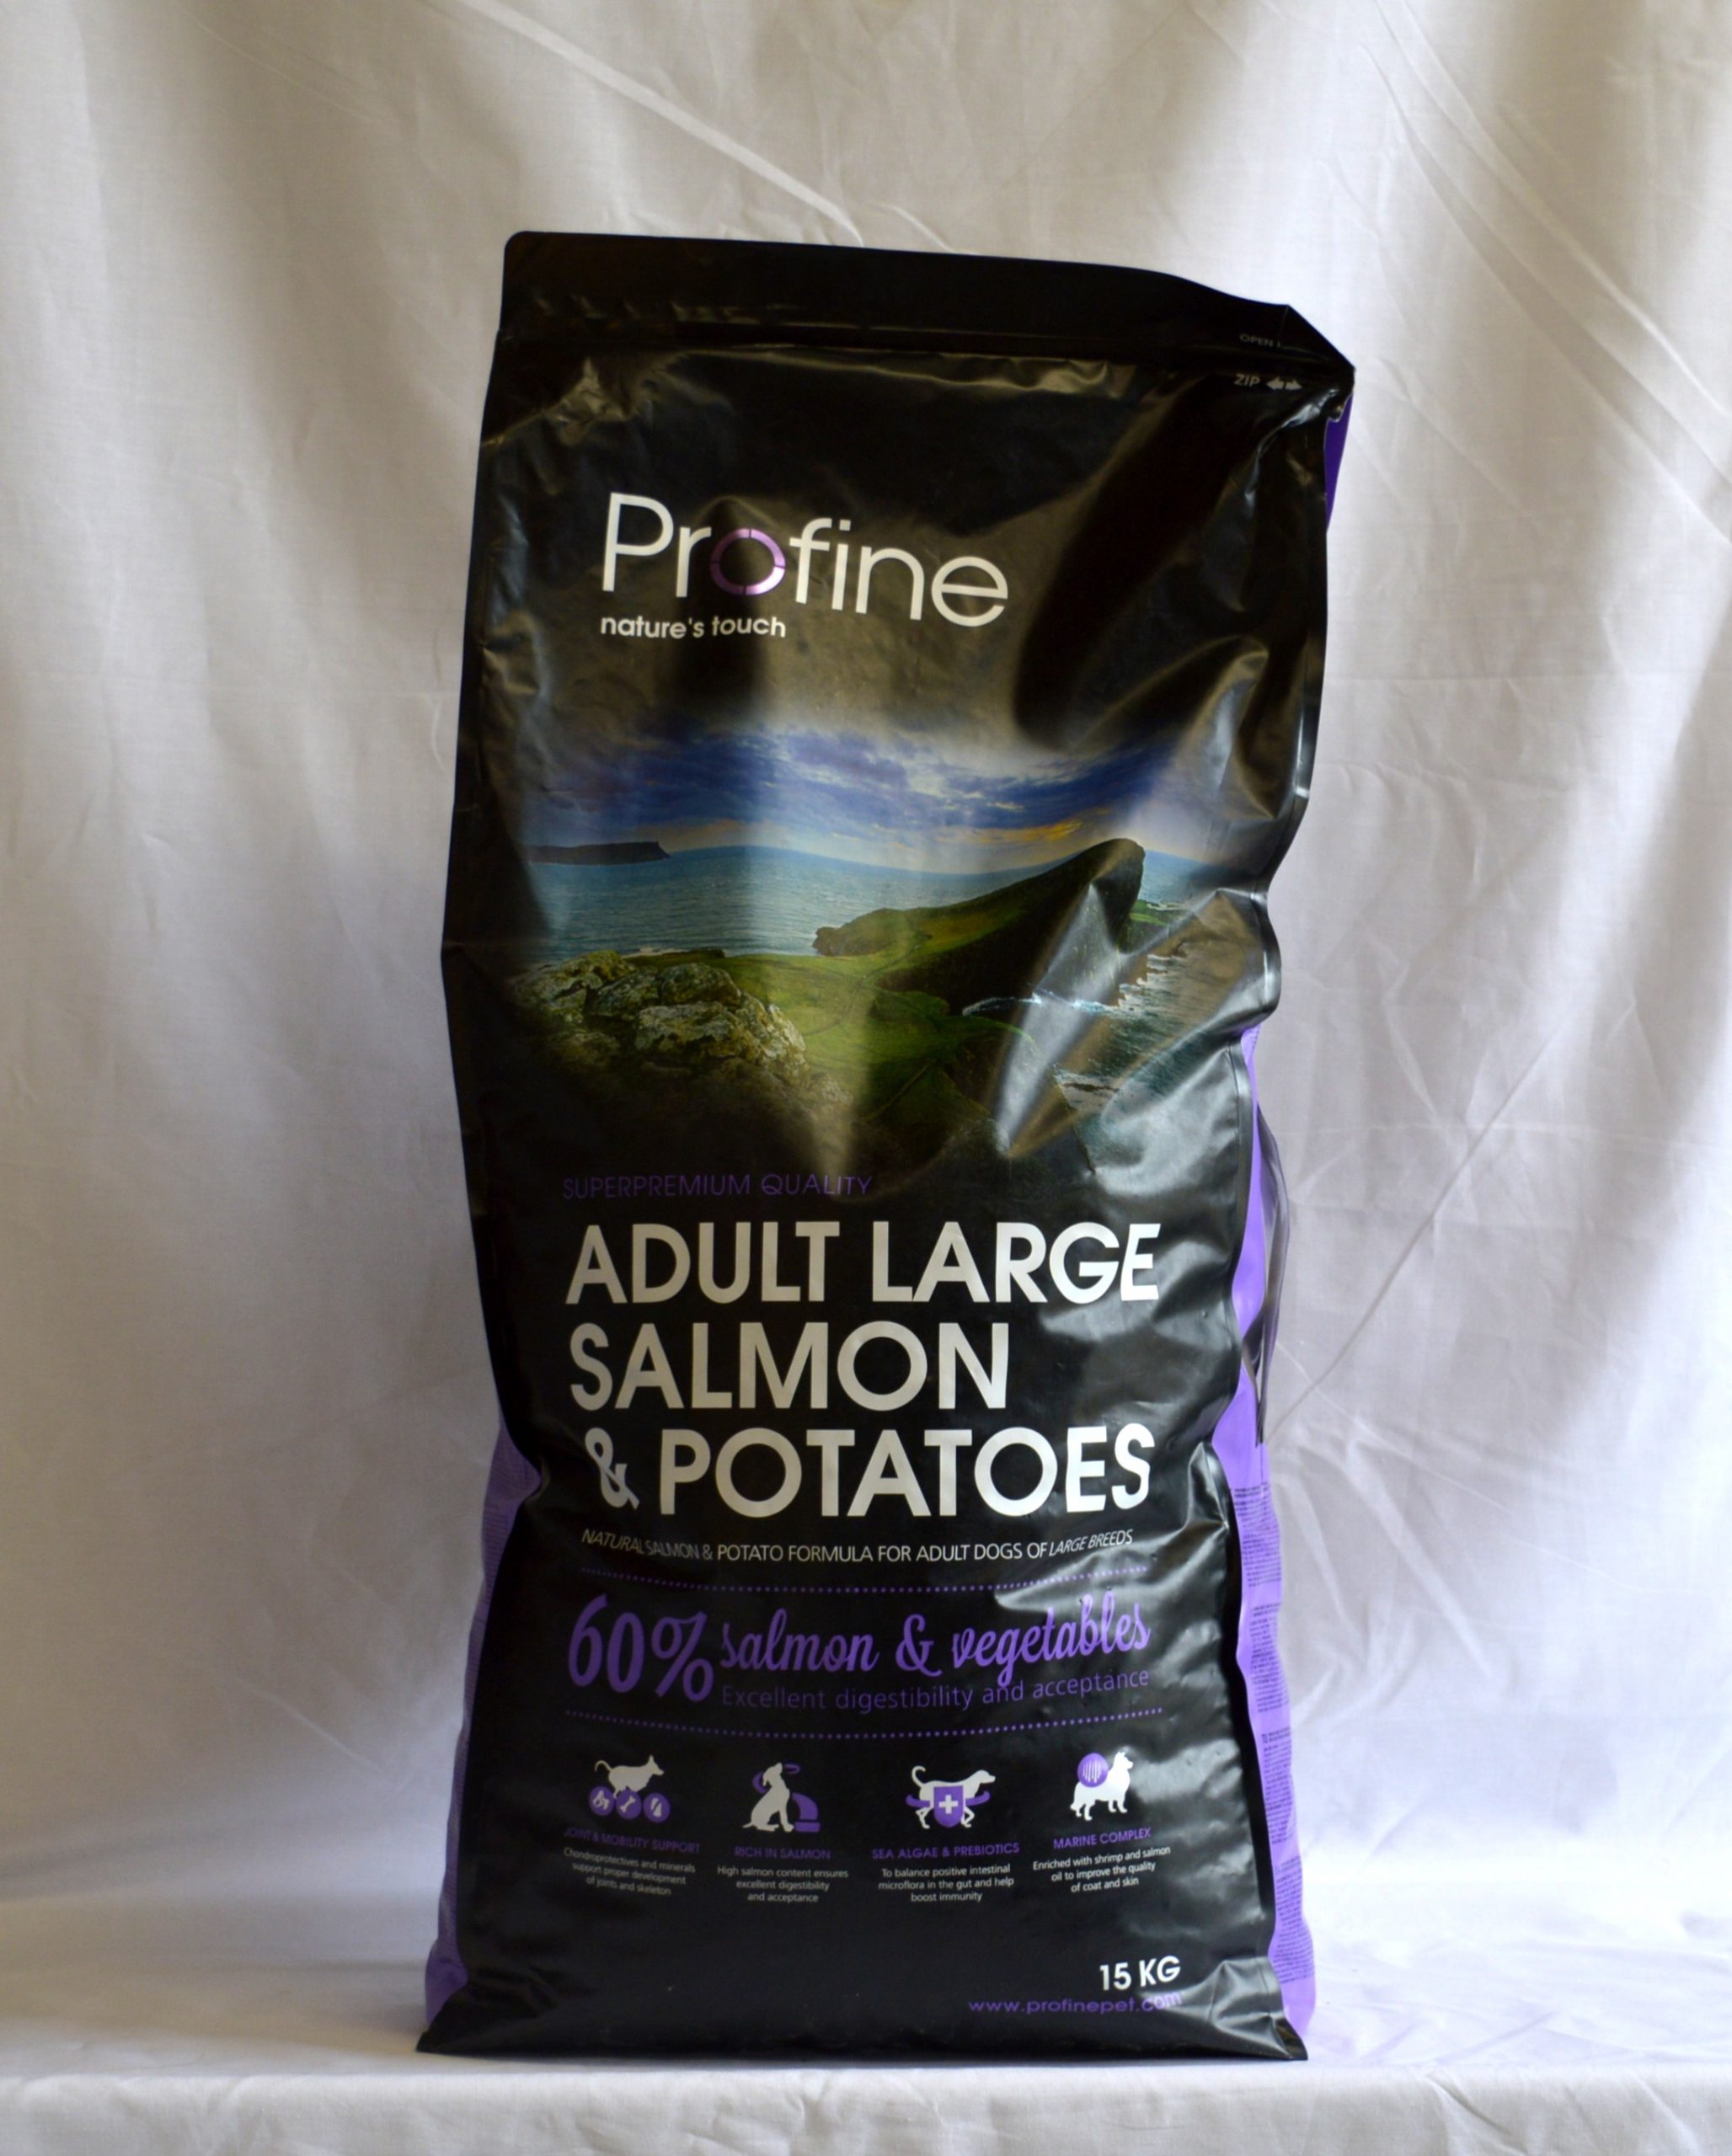 Profine Salmon & Potatoes Adult Large-15kg